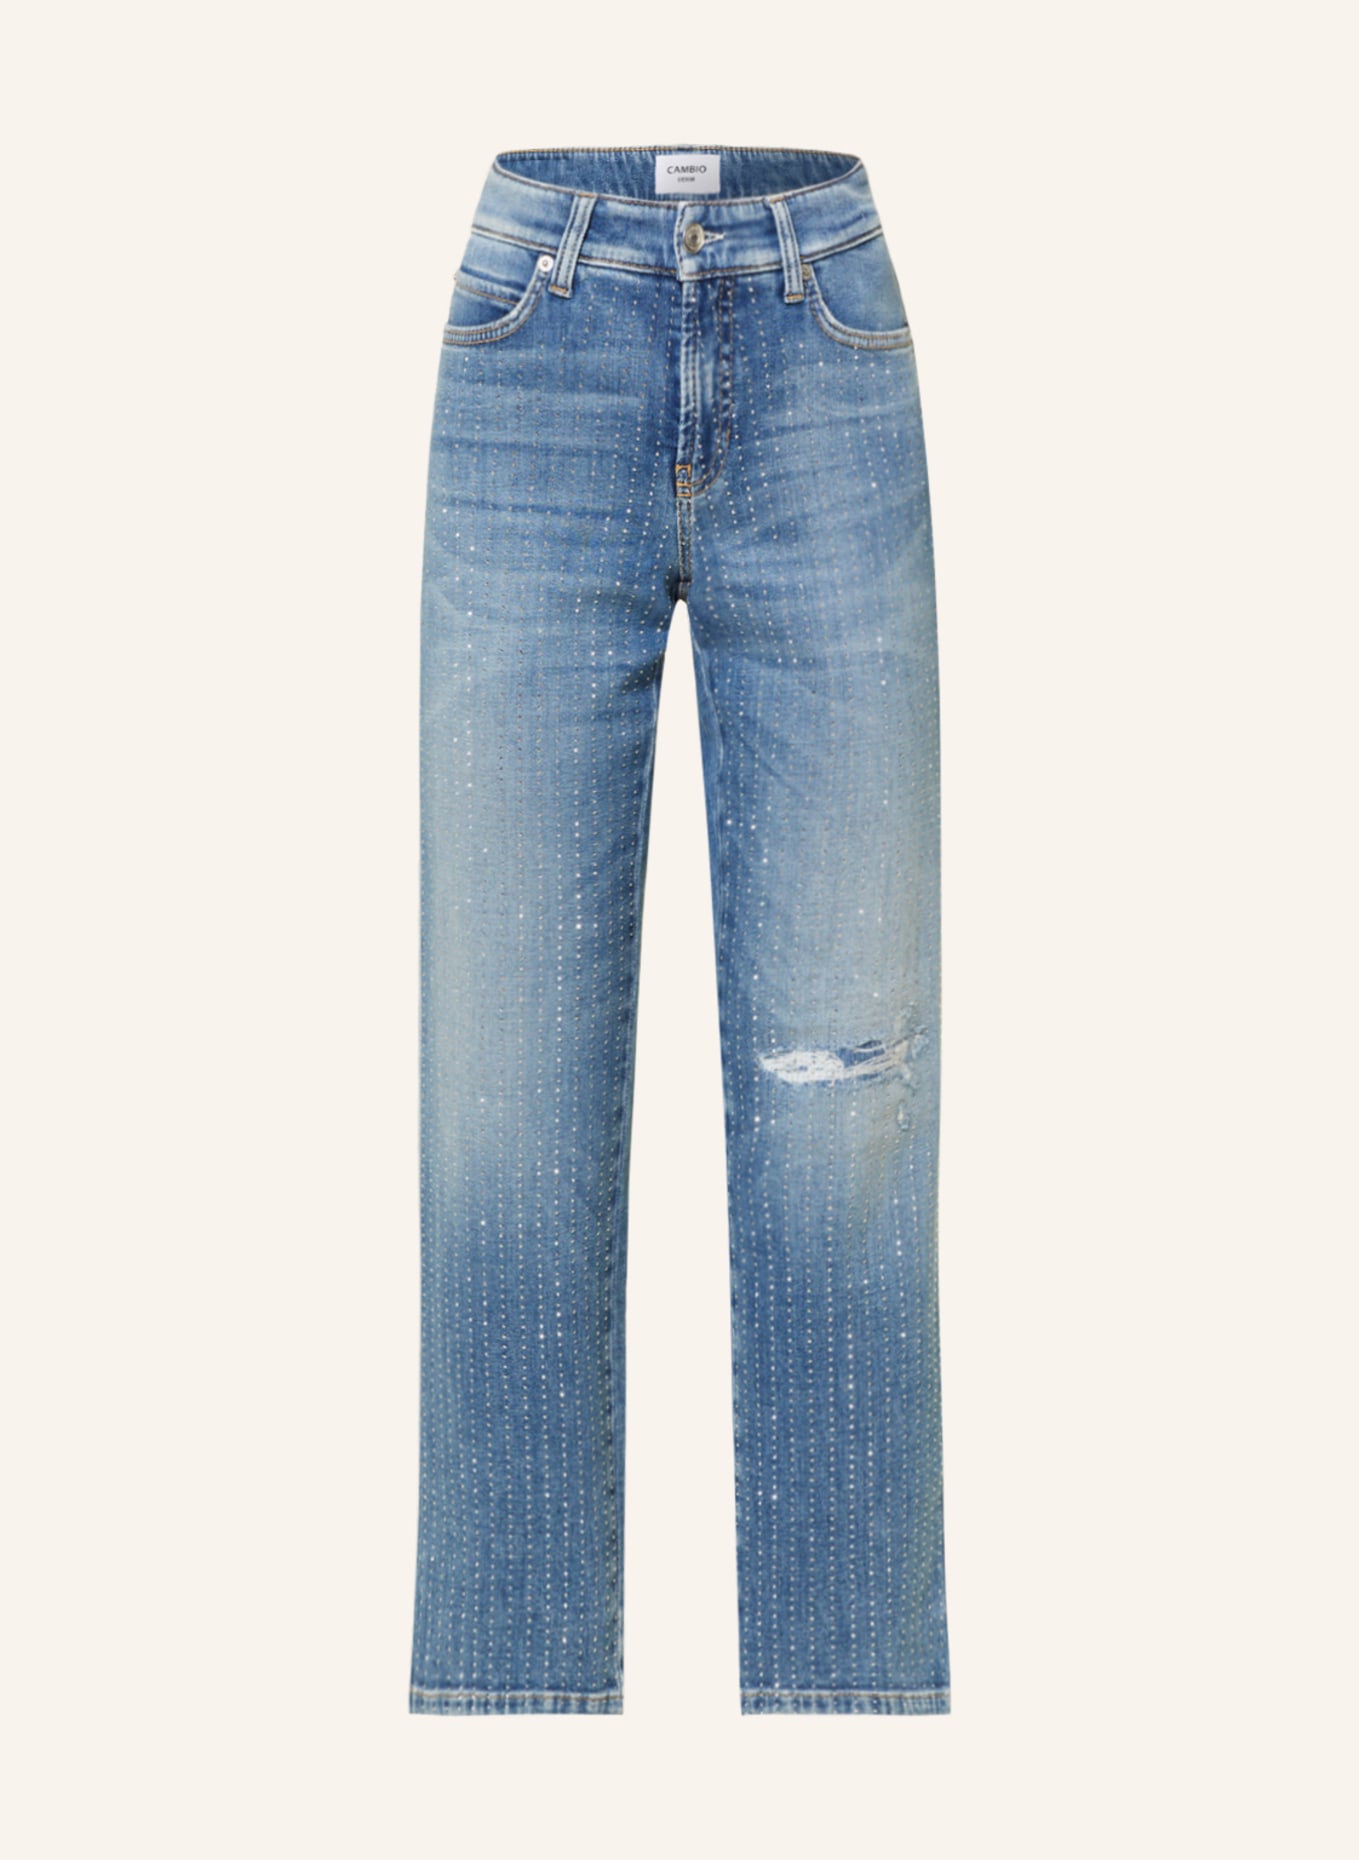 CAMBIO 7/8 jeans PARIS with decorative gems, Color: 5251 salty authentic contrast (Image 1)